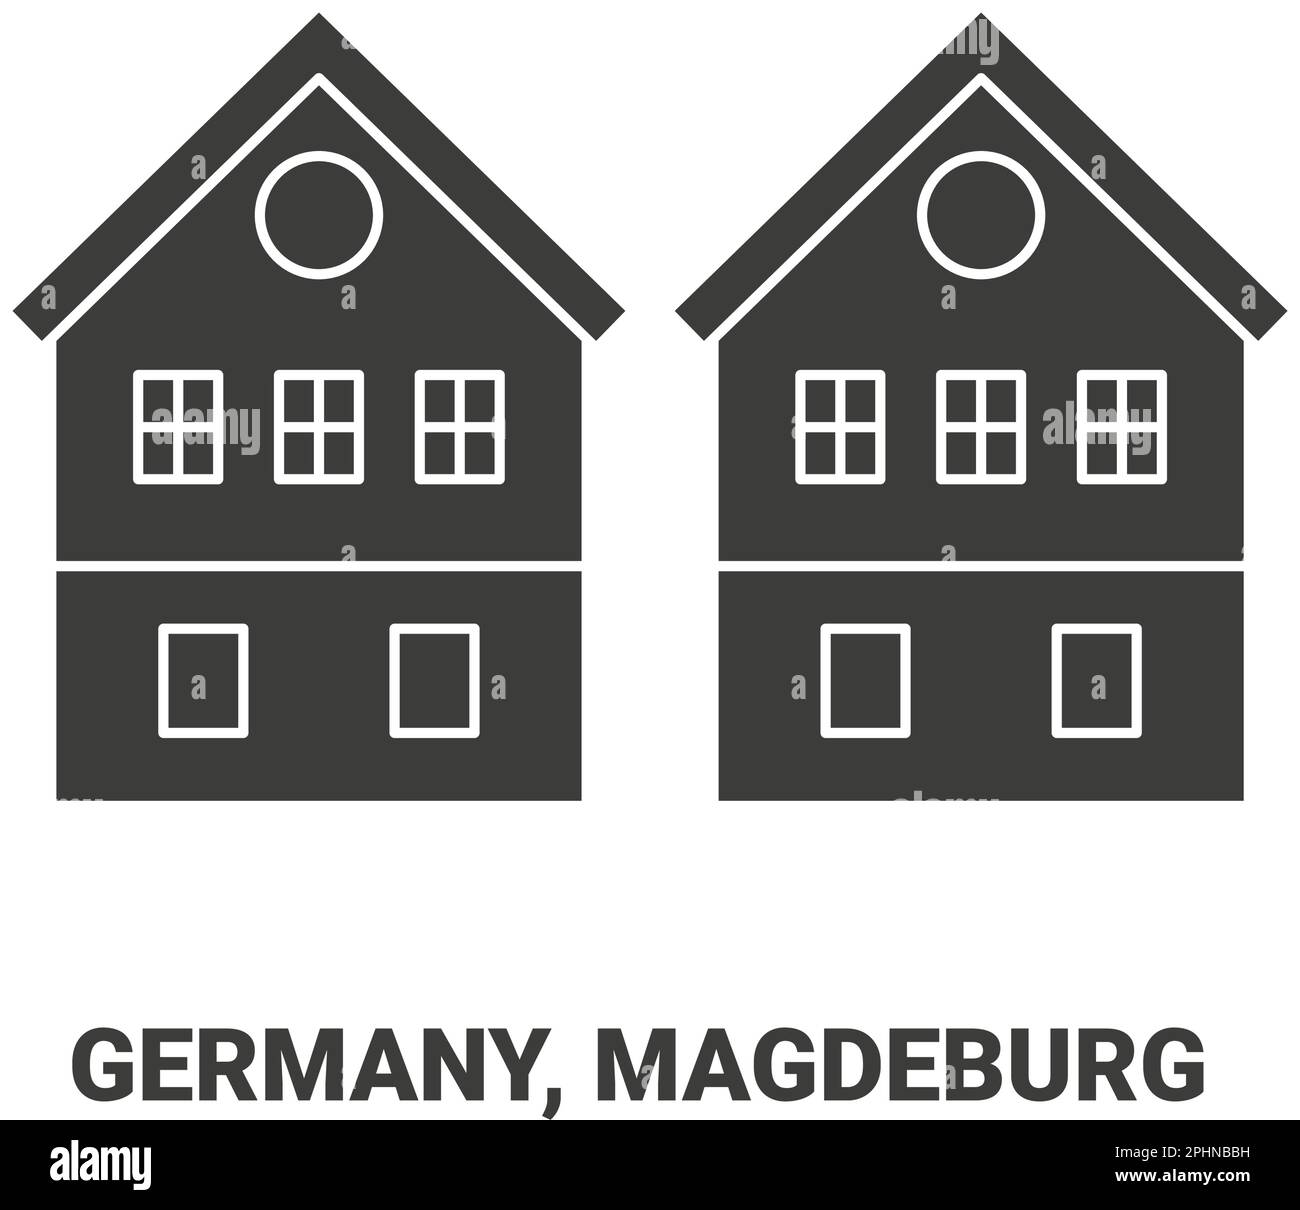 Germania, Magdeburgo viaggio riferimento vettoriale illustrazione Illustrazione Vettoriale